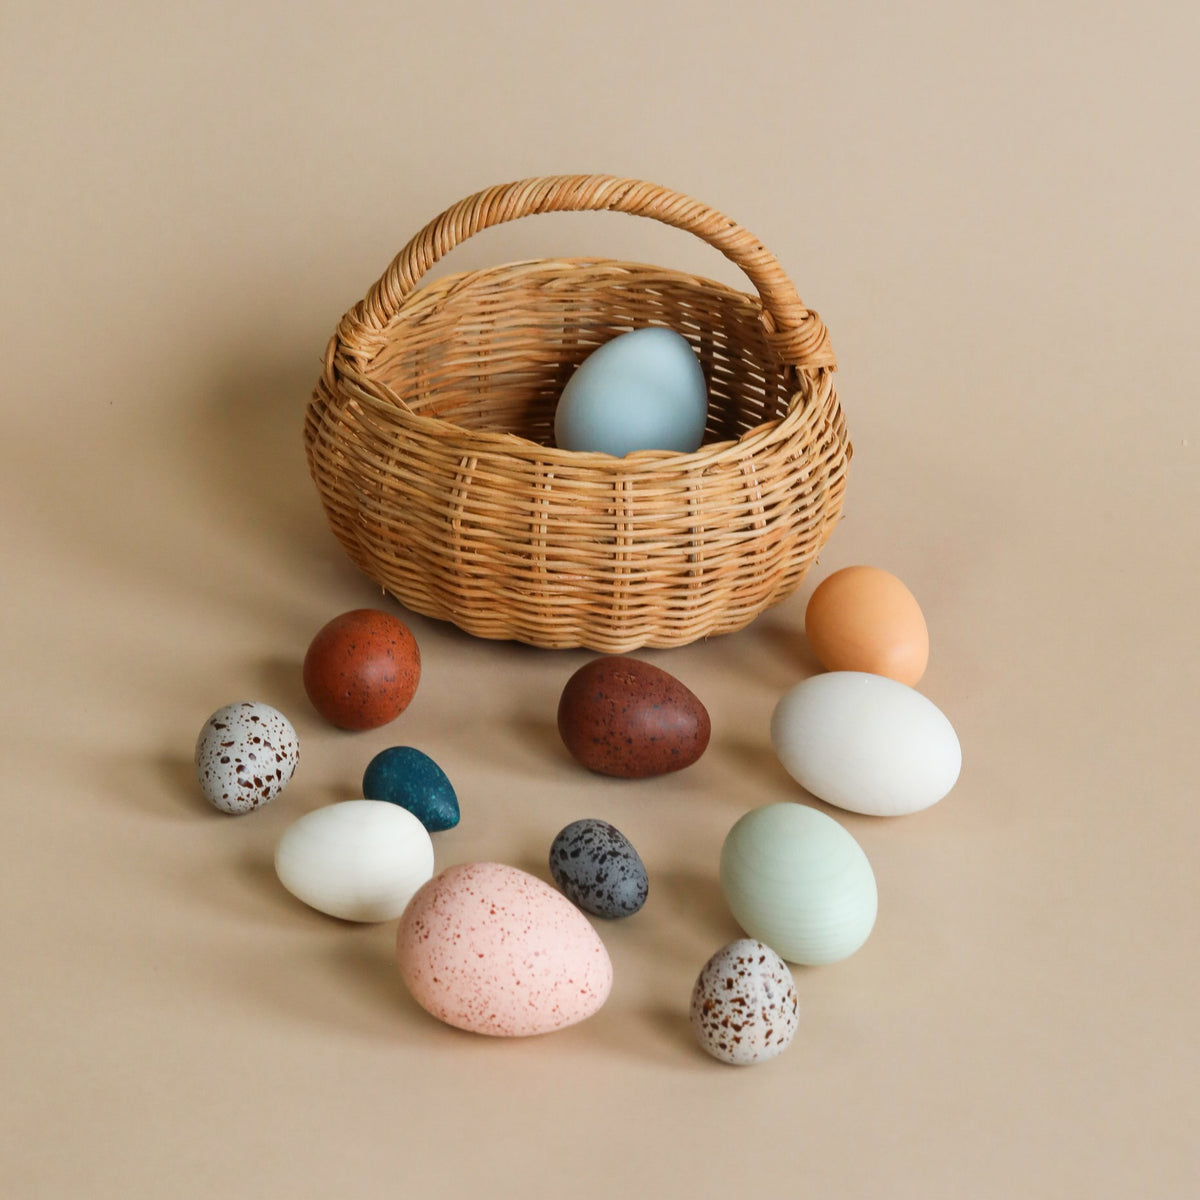 Hollow Wooden Easter Egg